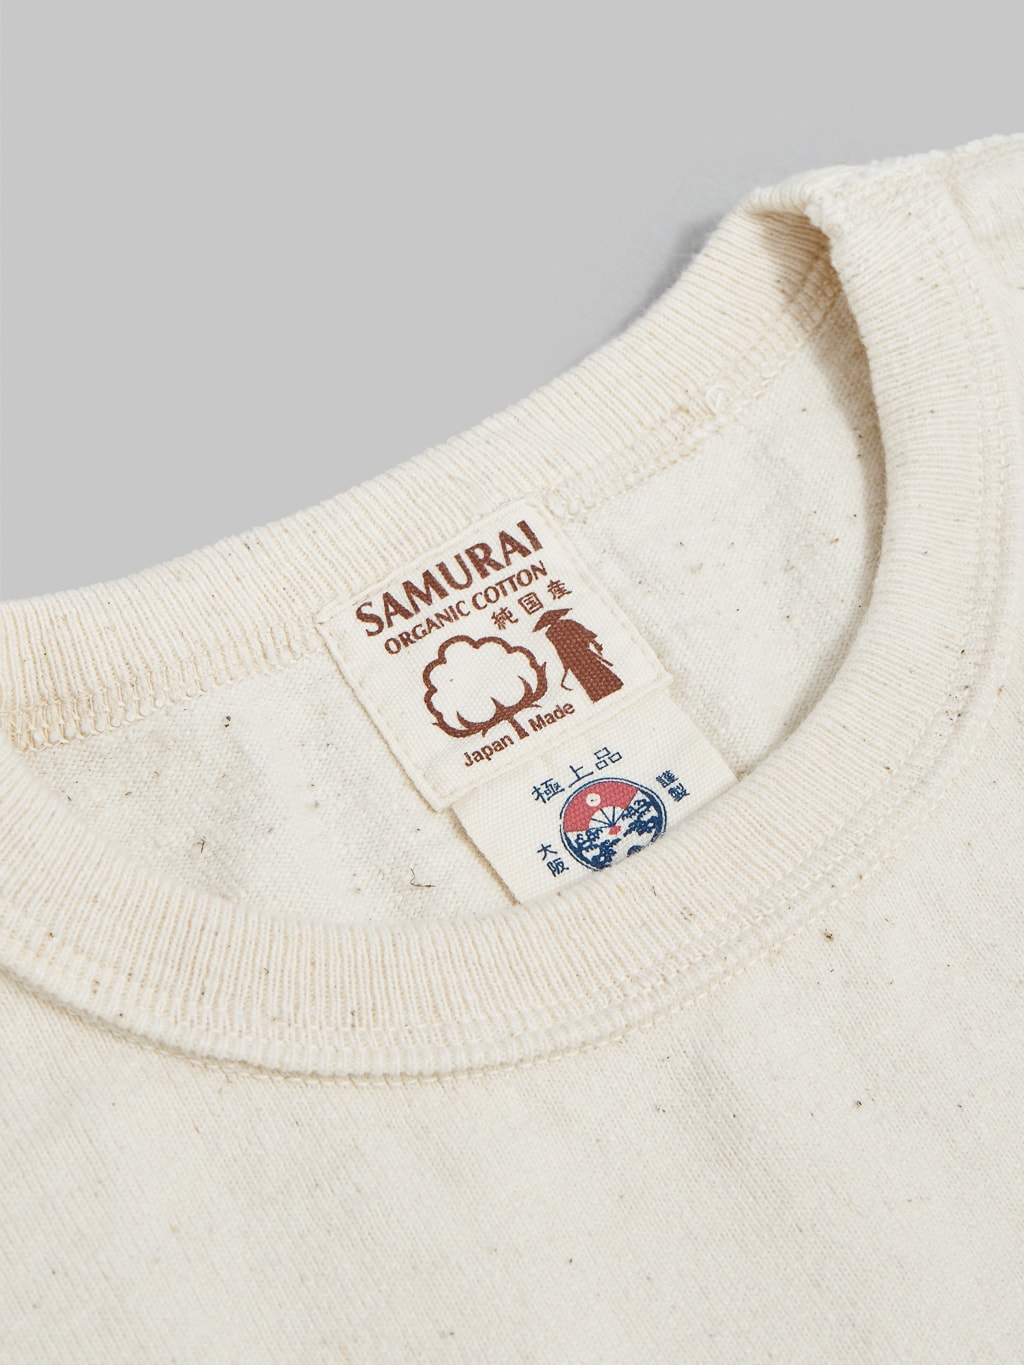 Samurai jeans japanese long sleeve tshirt natural brand label